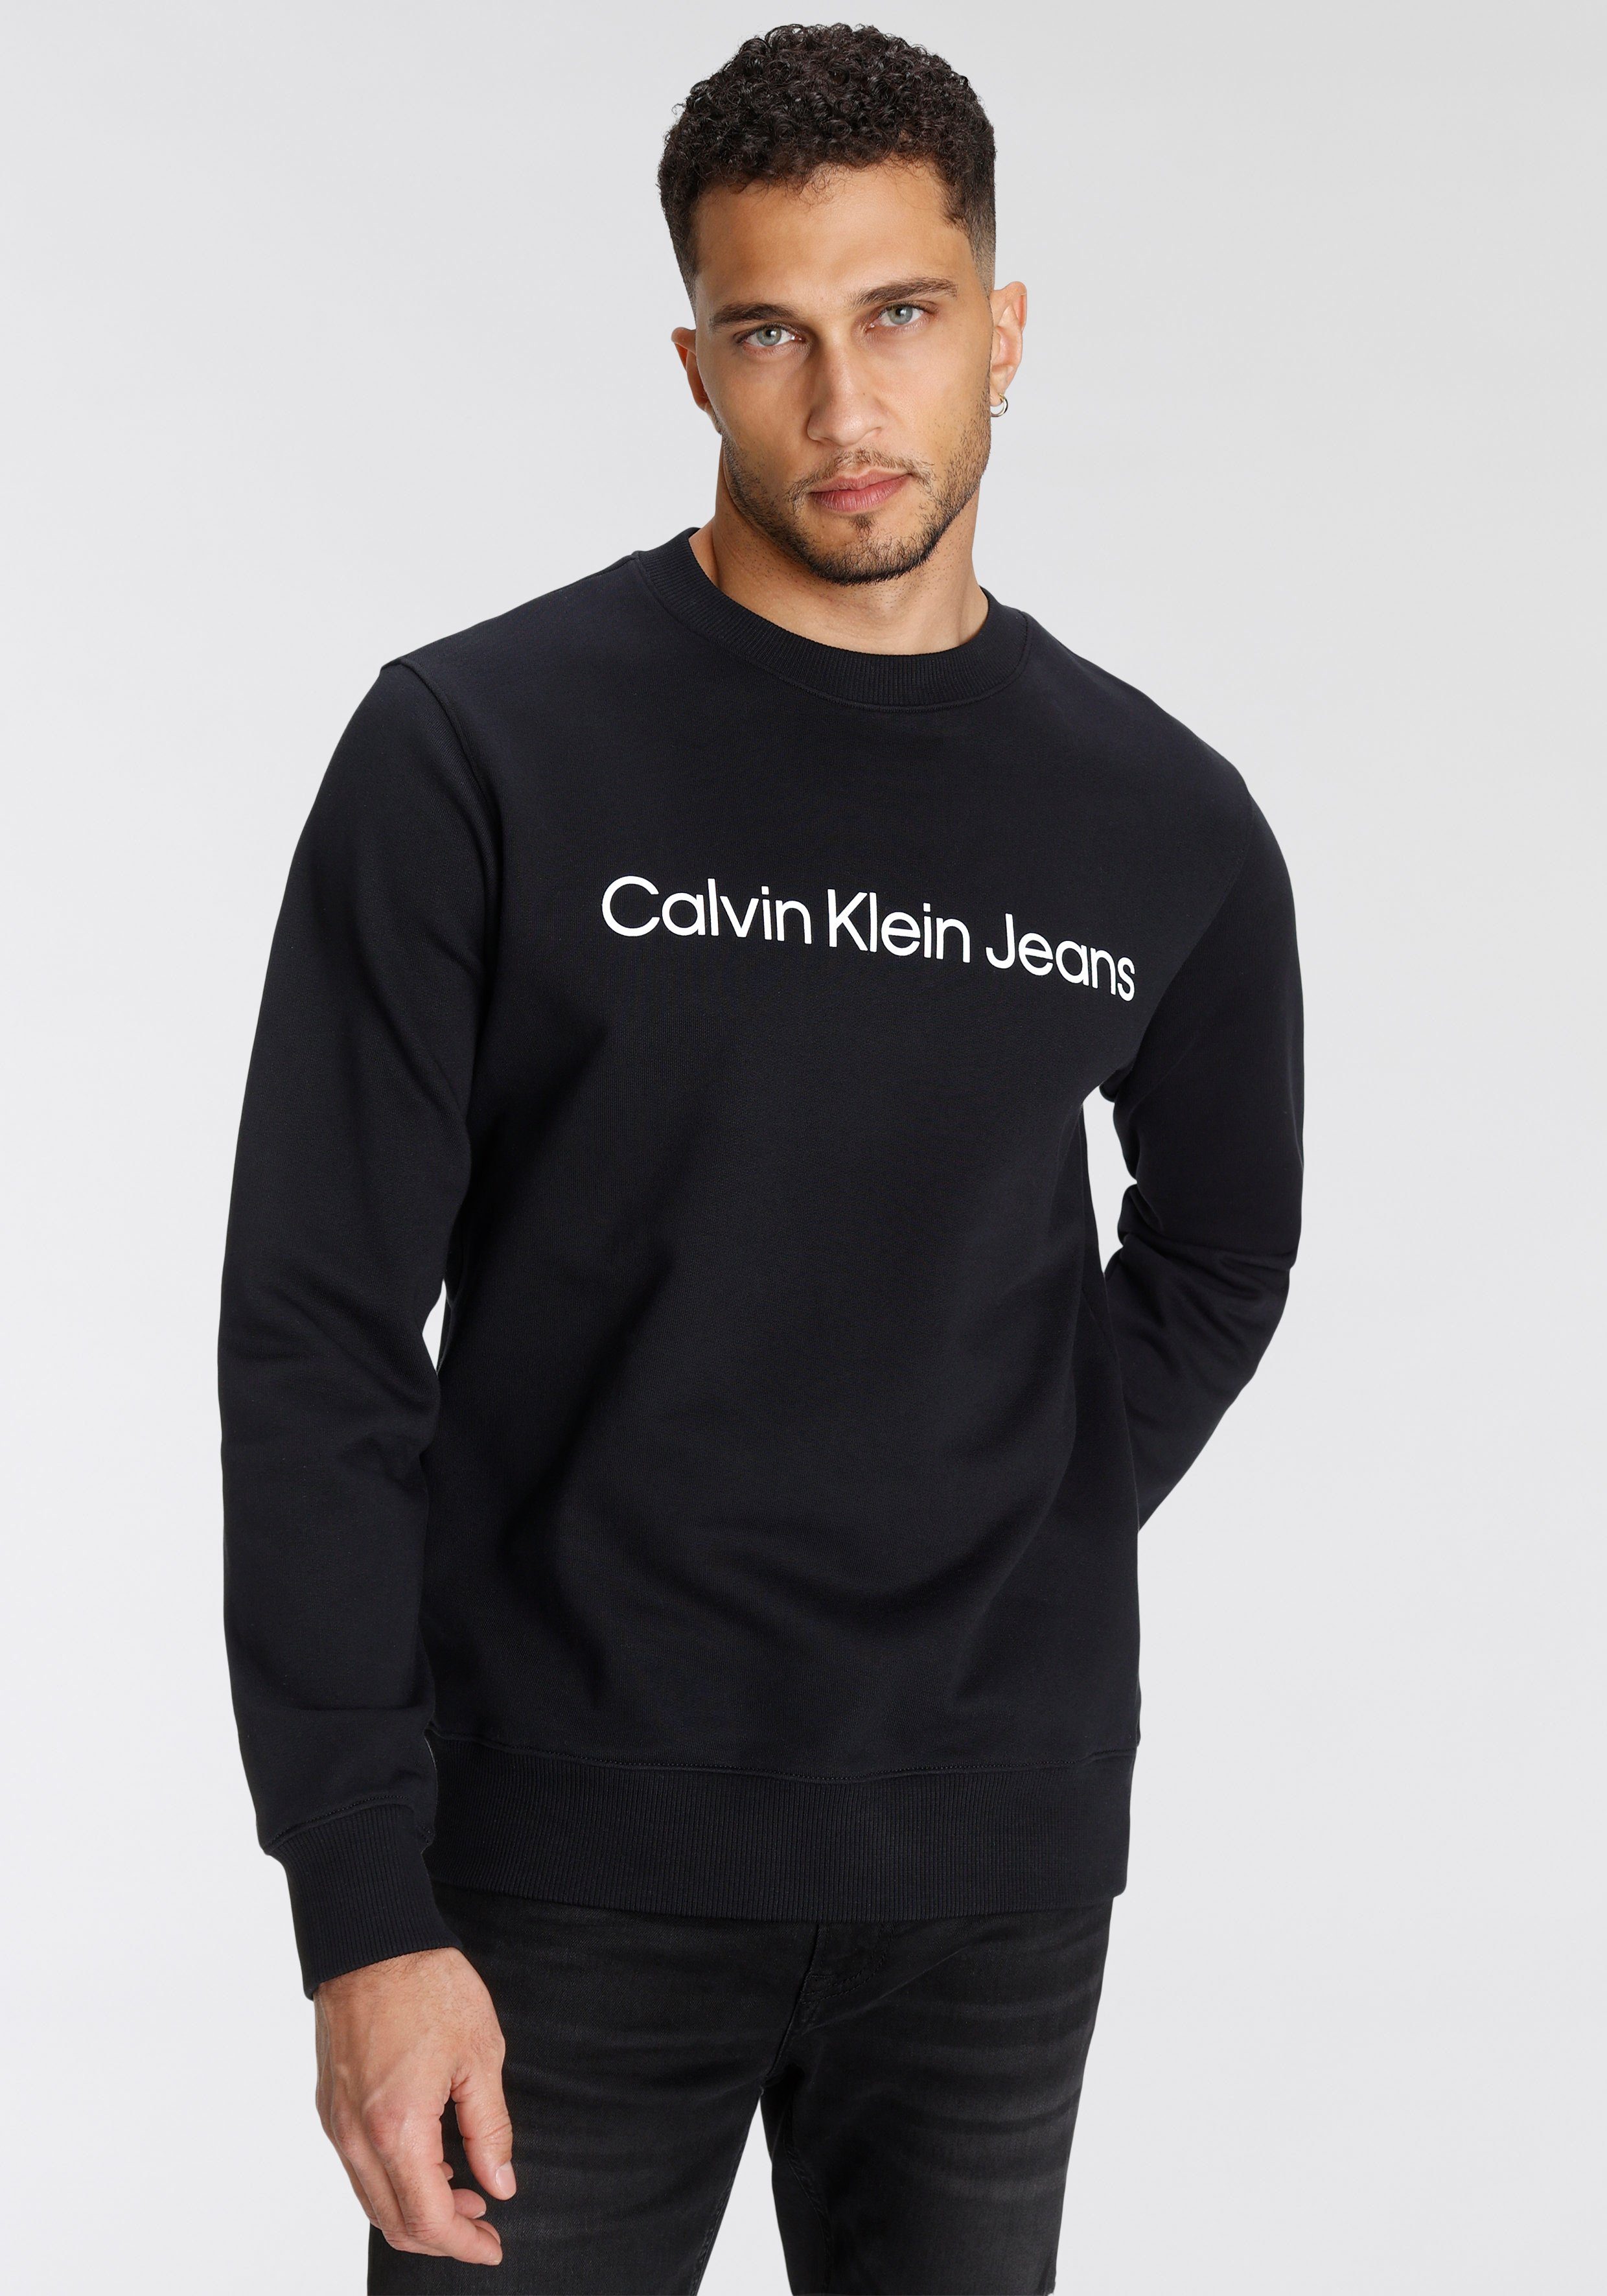 Calvin Klein Jeans LOGO CORE SWEATSHIRT Sweatshirt INSTIT